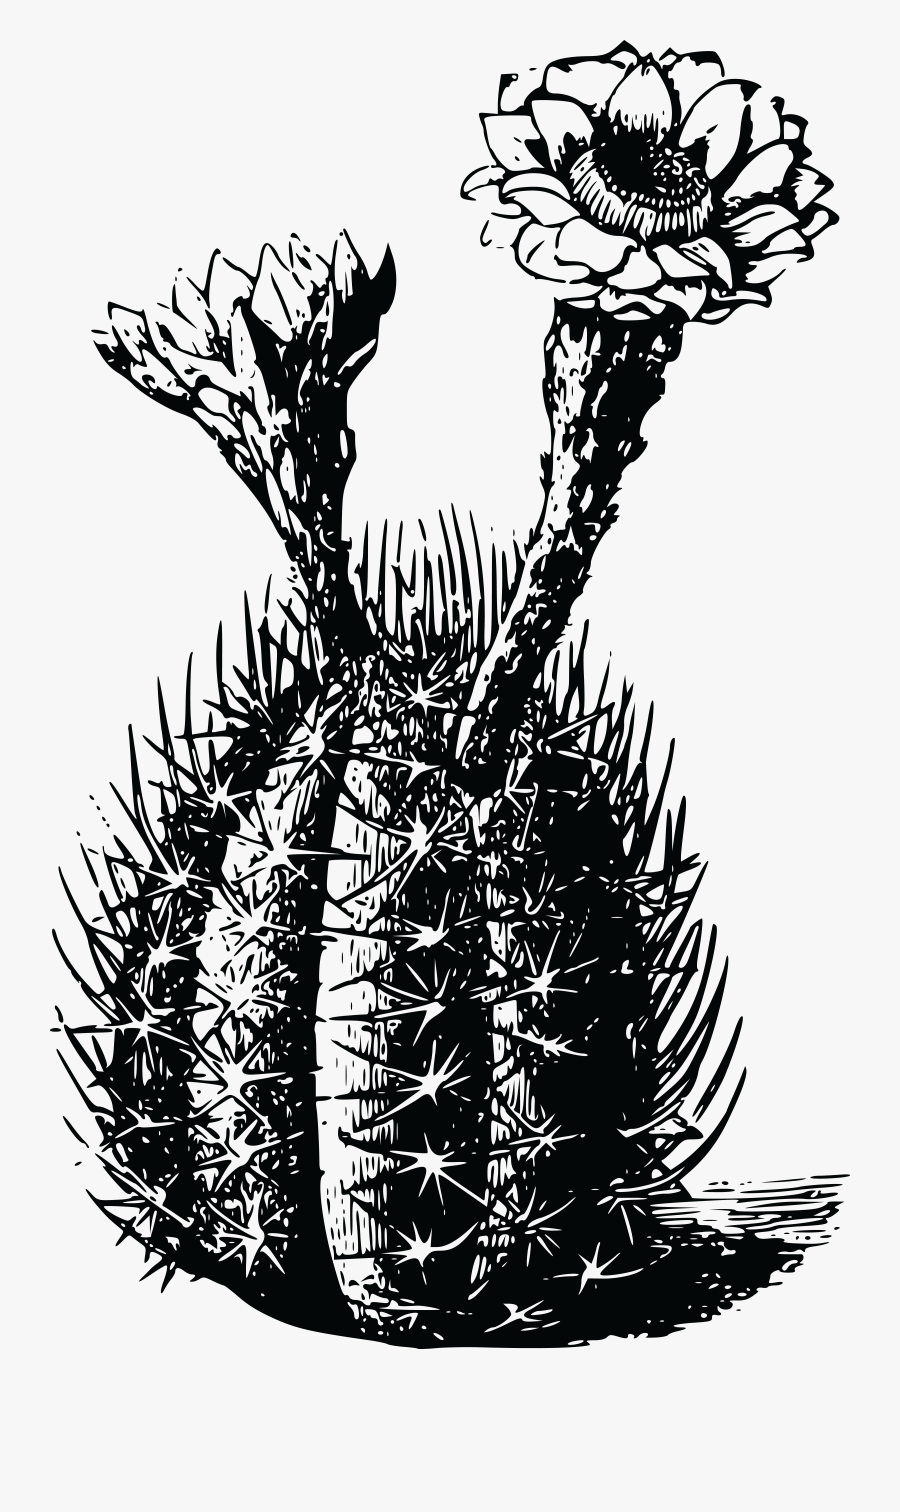 Free Clipart Of A Cactus - Cactus Black And White Transparent, Transparent Clipart